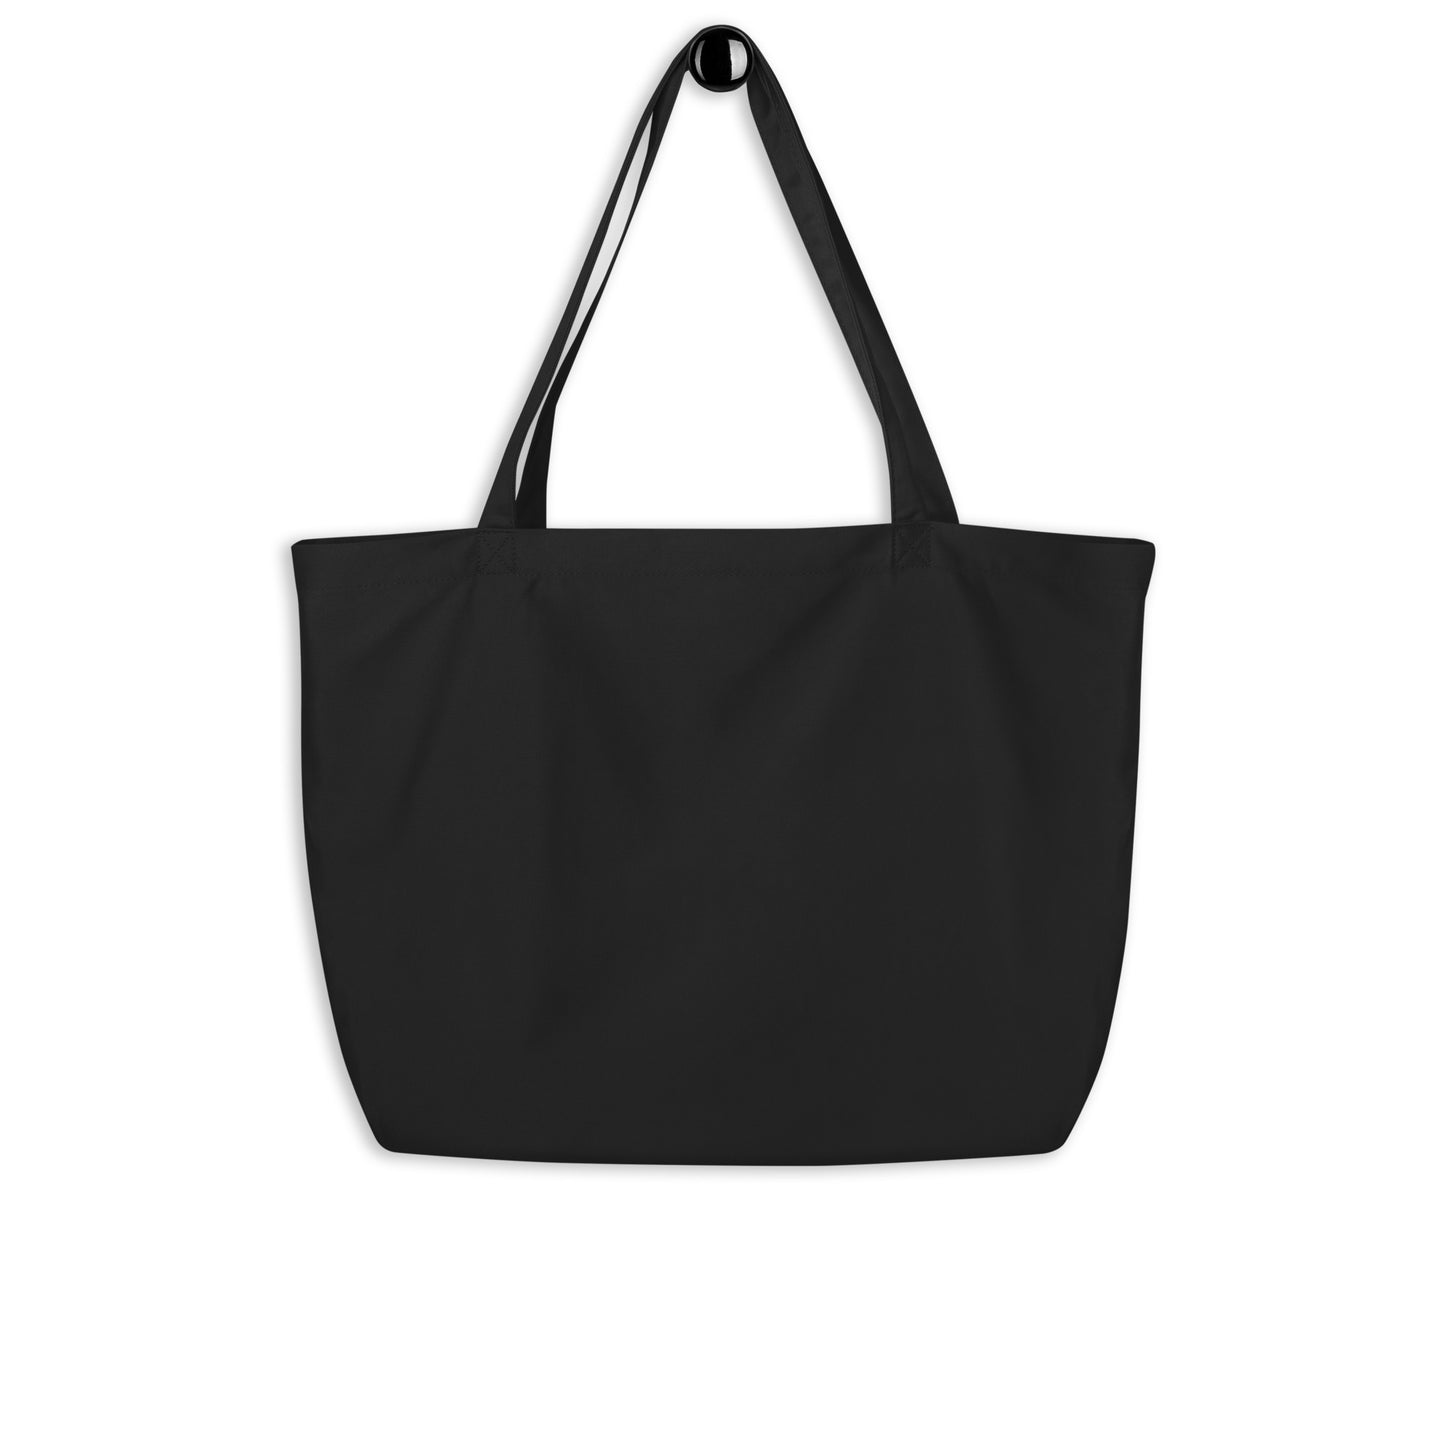 Kwoon Blackstar - Large organic tote bag